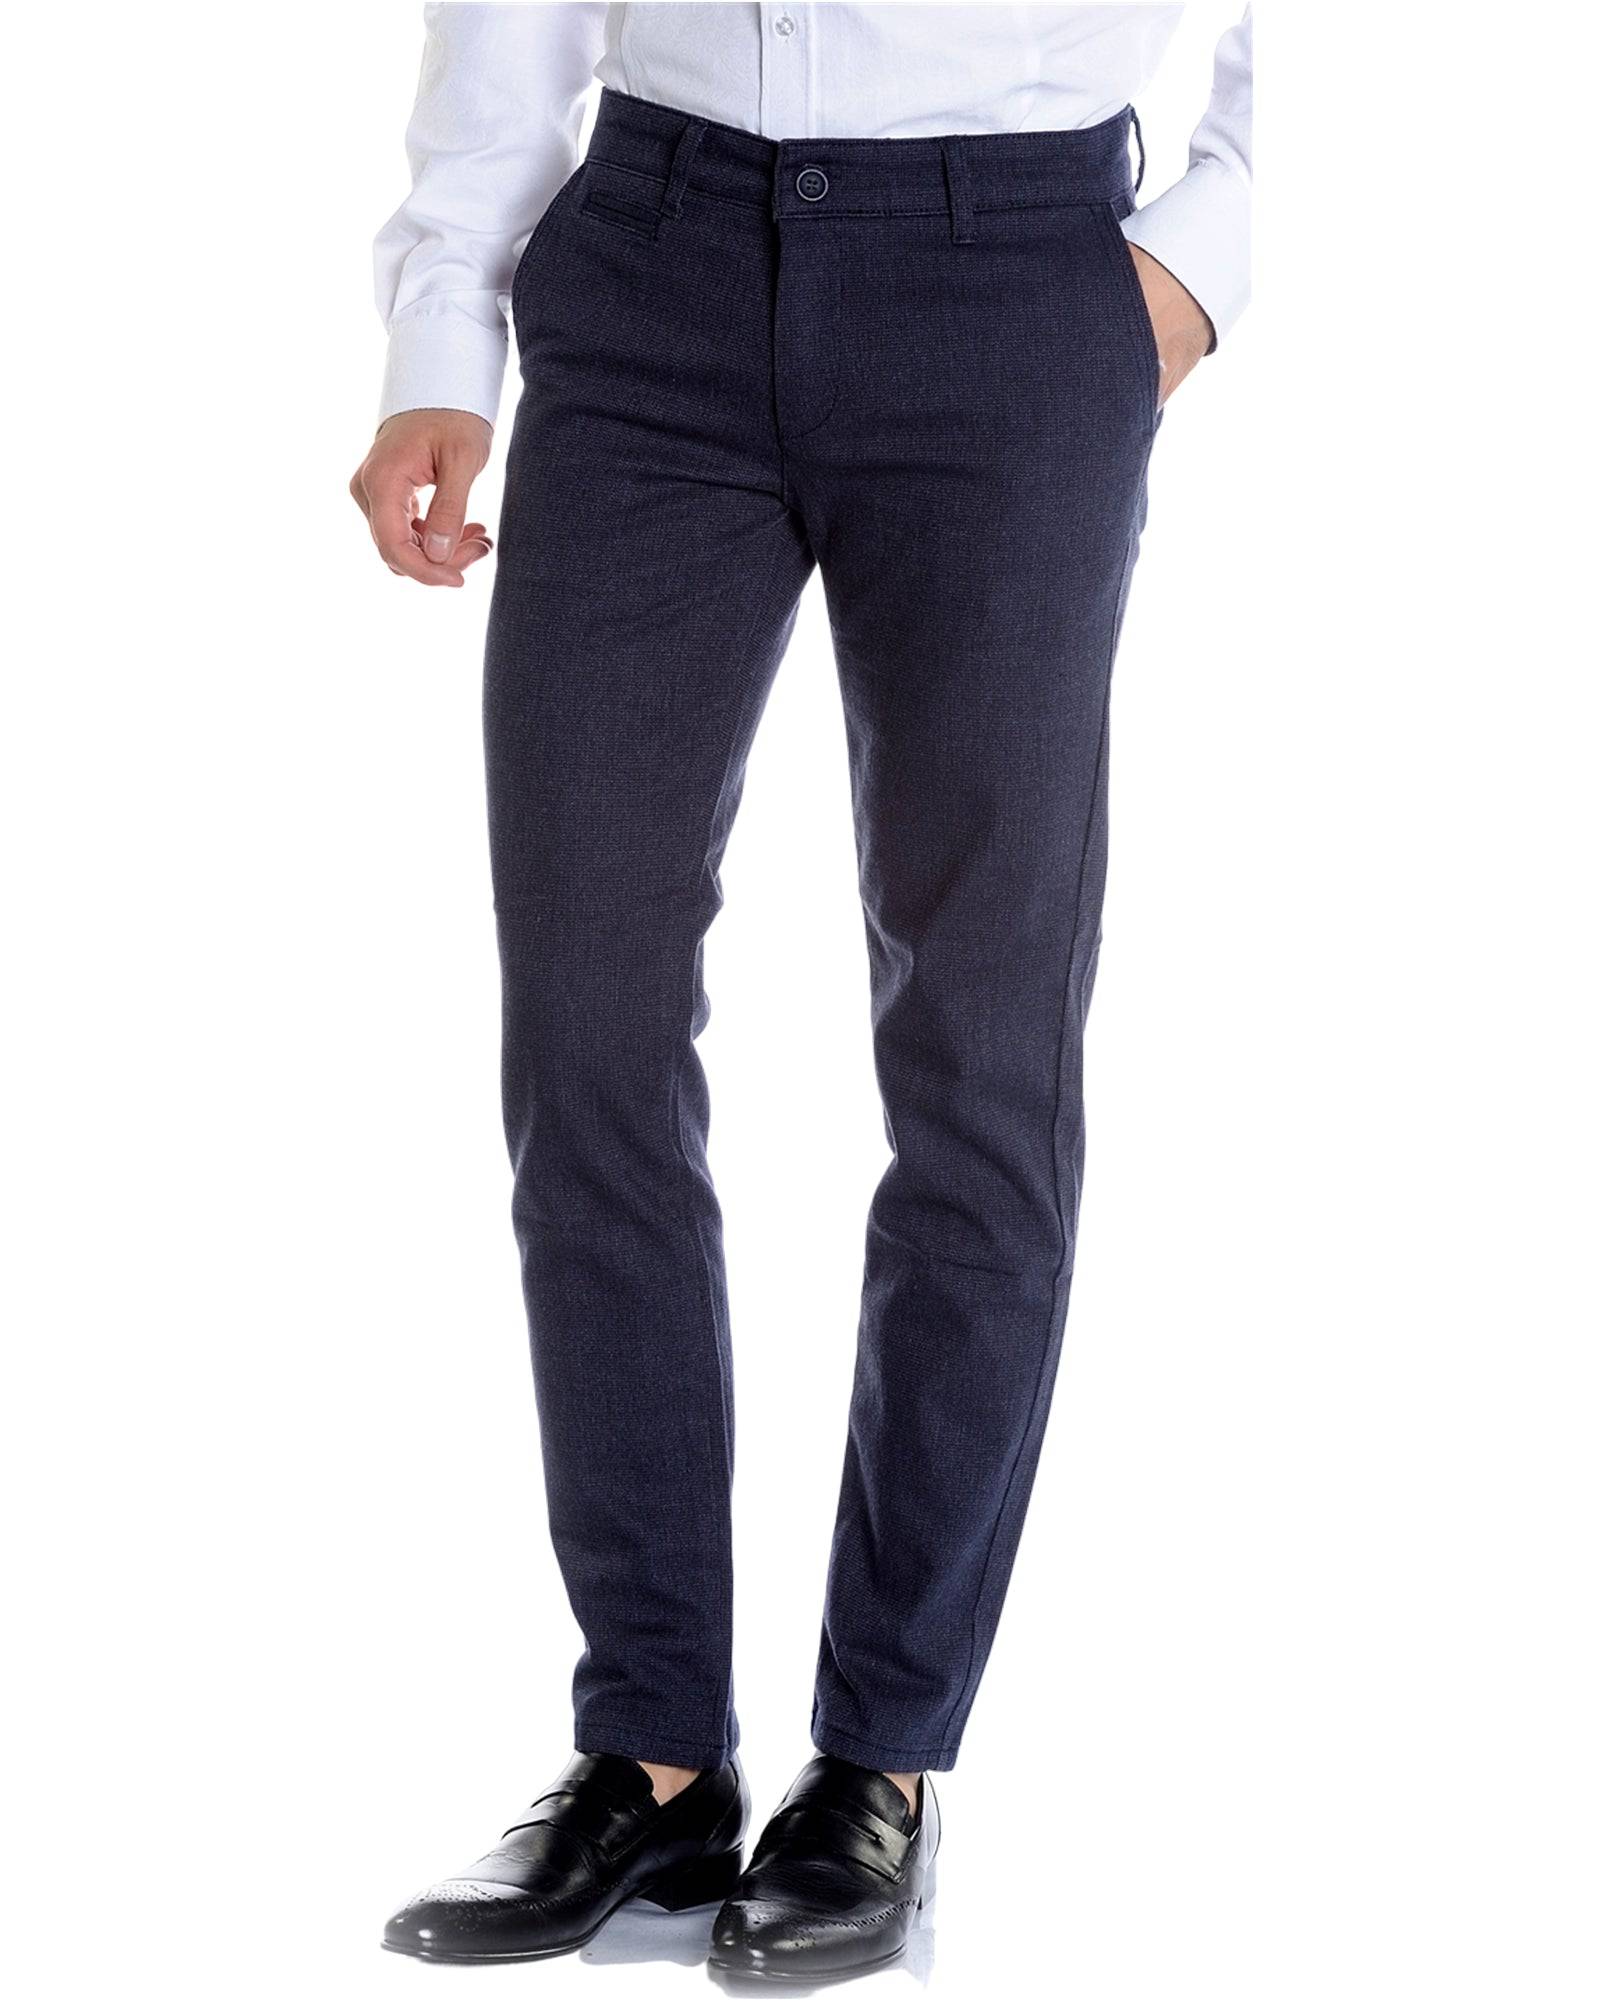 Navy Slim Fit Stretch Casual Slacks - Rainwater's Men's Clothing and Tuxedo Rental